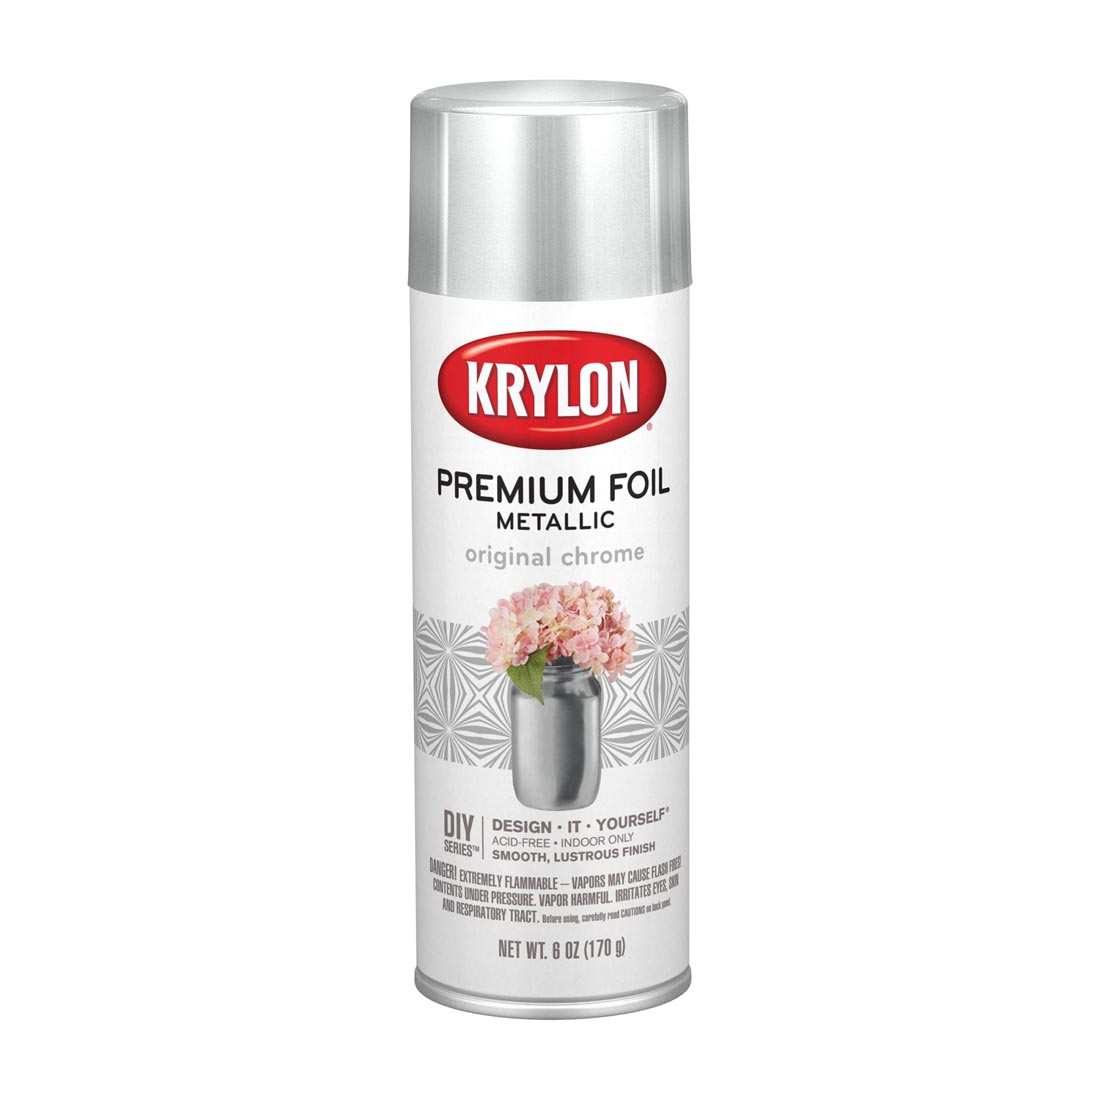 Krylon Premium Foil Metallic Chrome Spray Paint